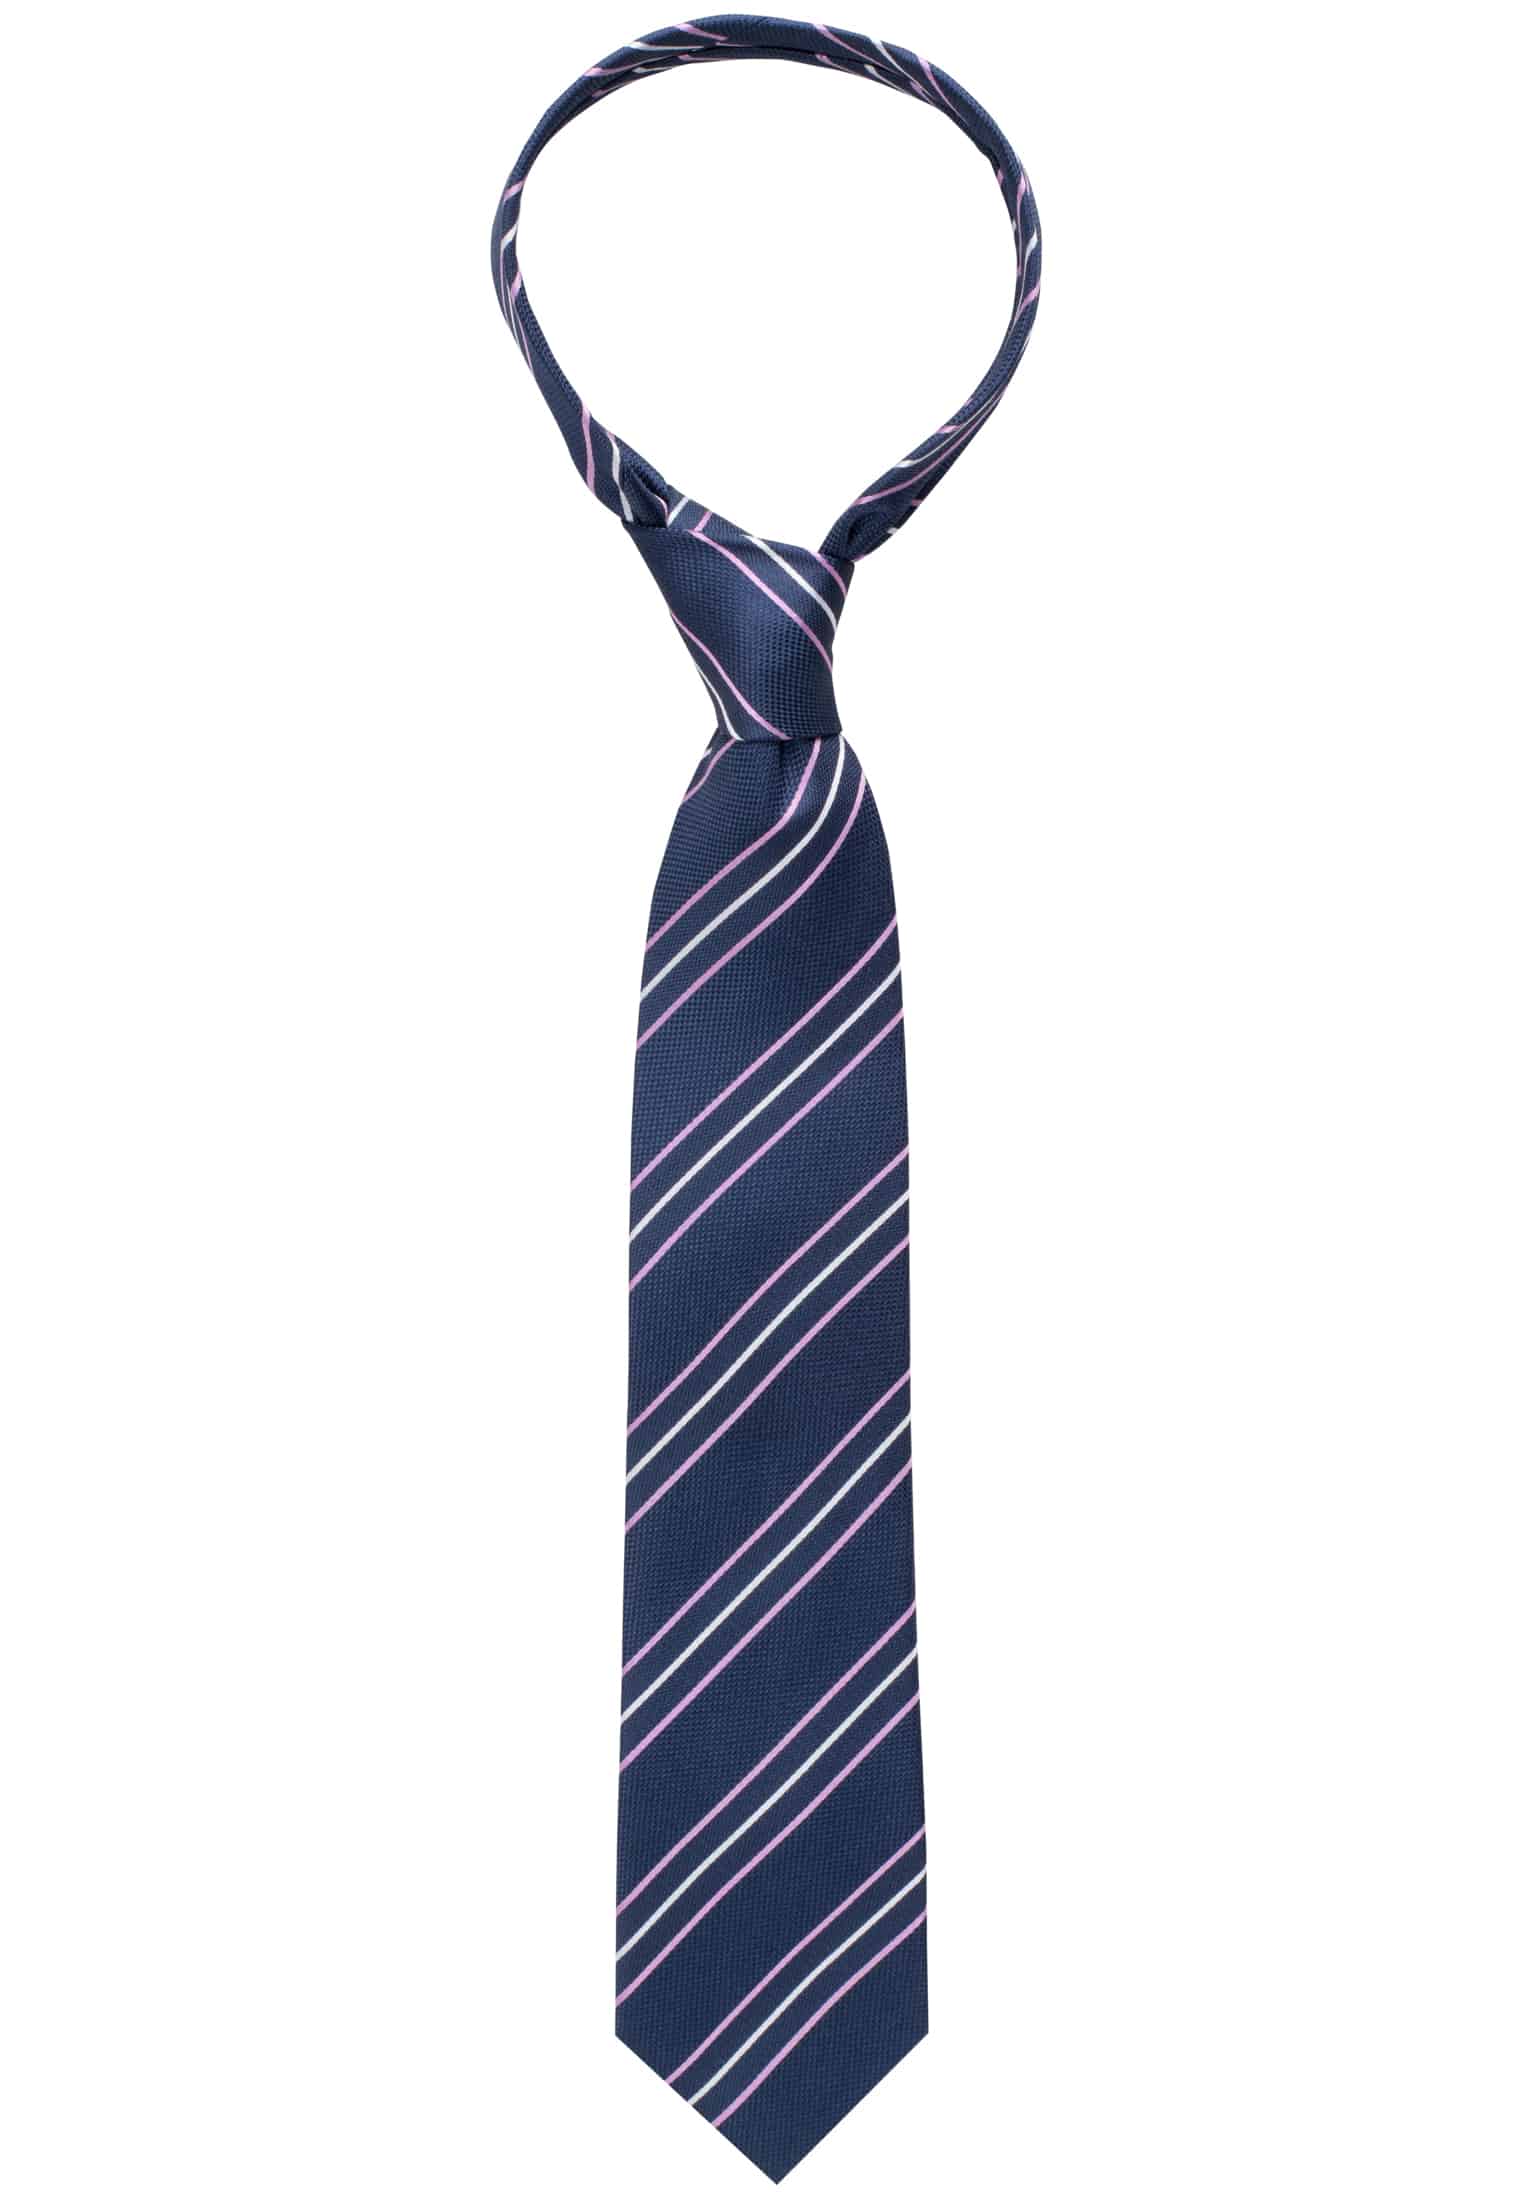 Krawatte in navy/rosa gestreift 142 | | 1AC00533-81-90-142 navy/rosa 